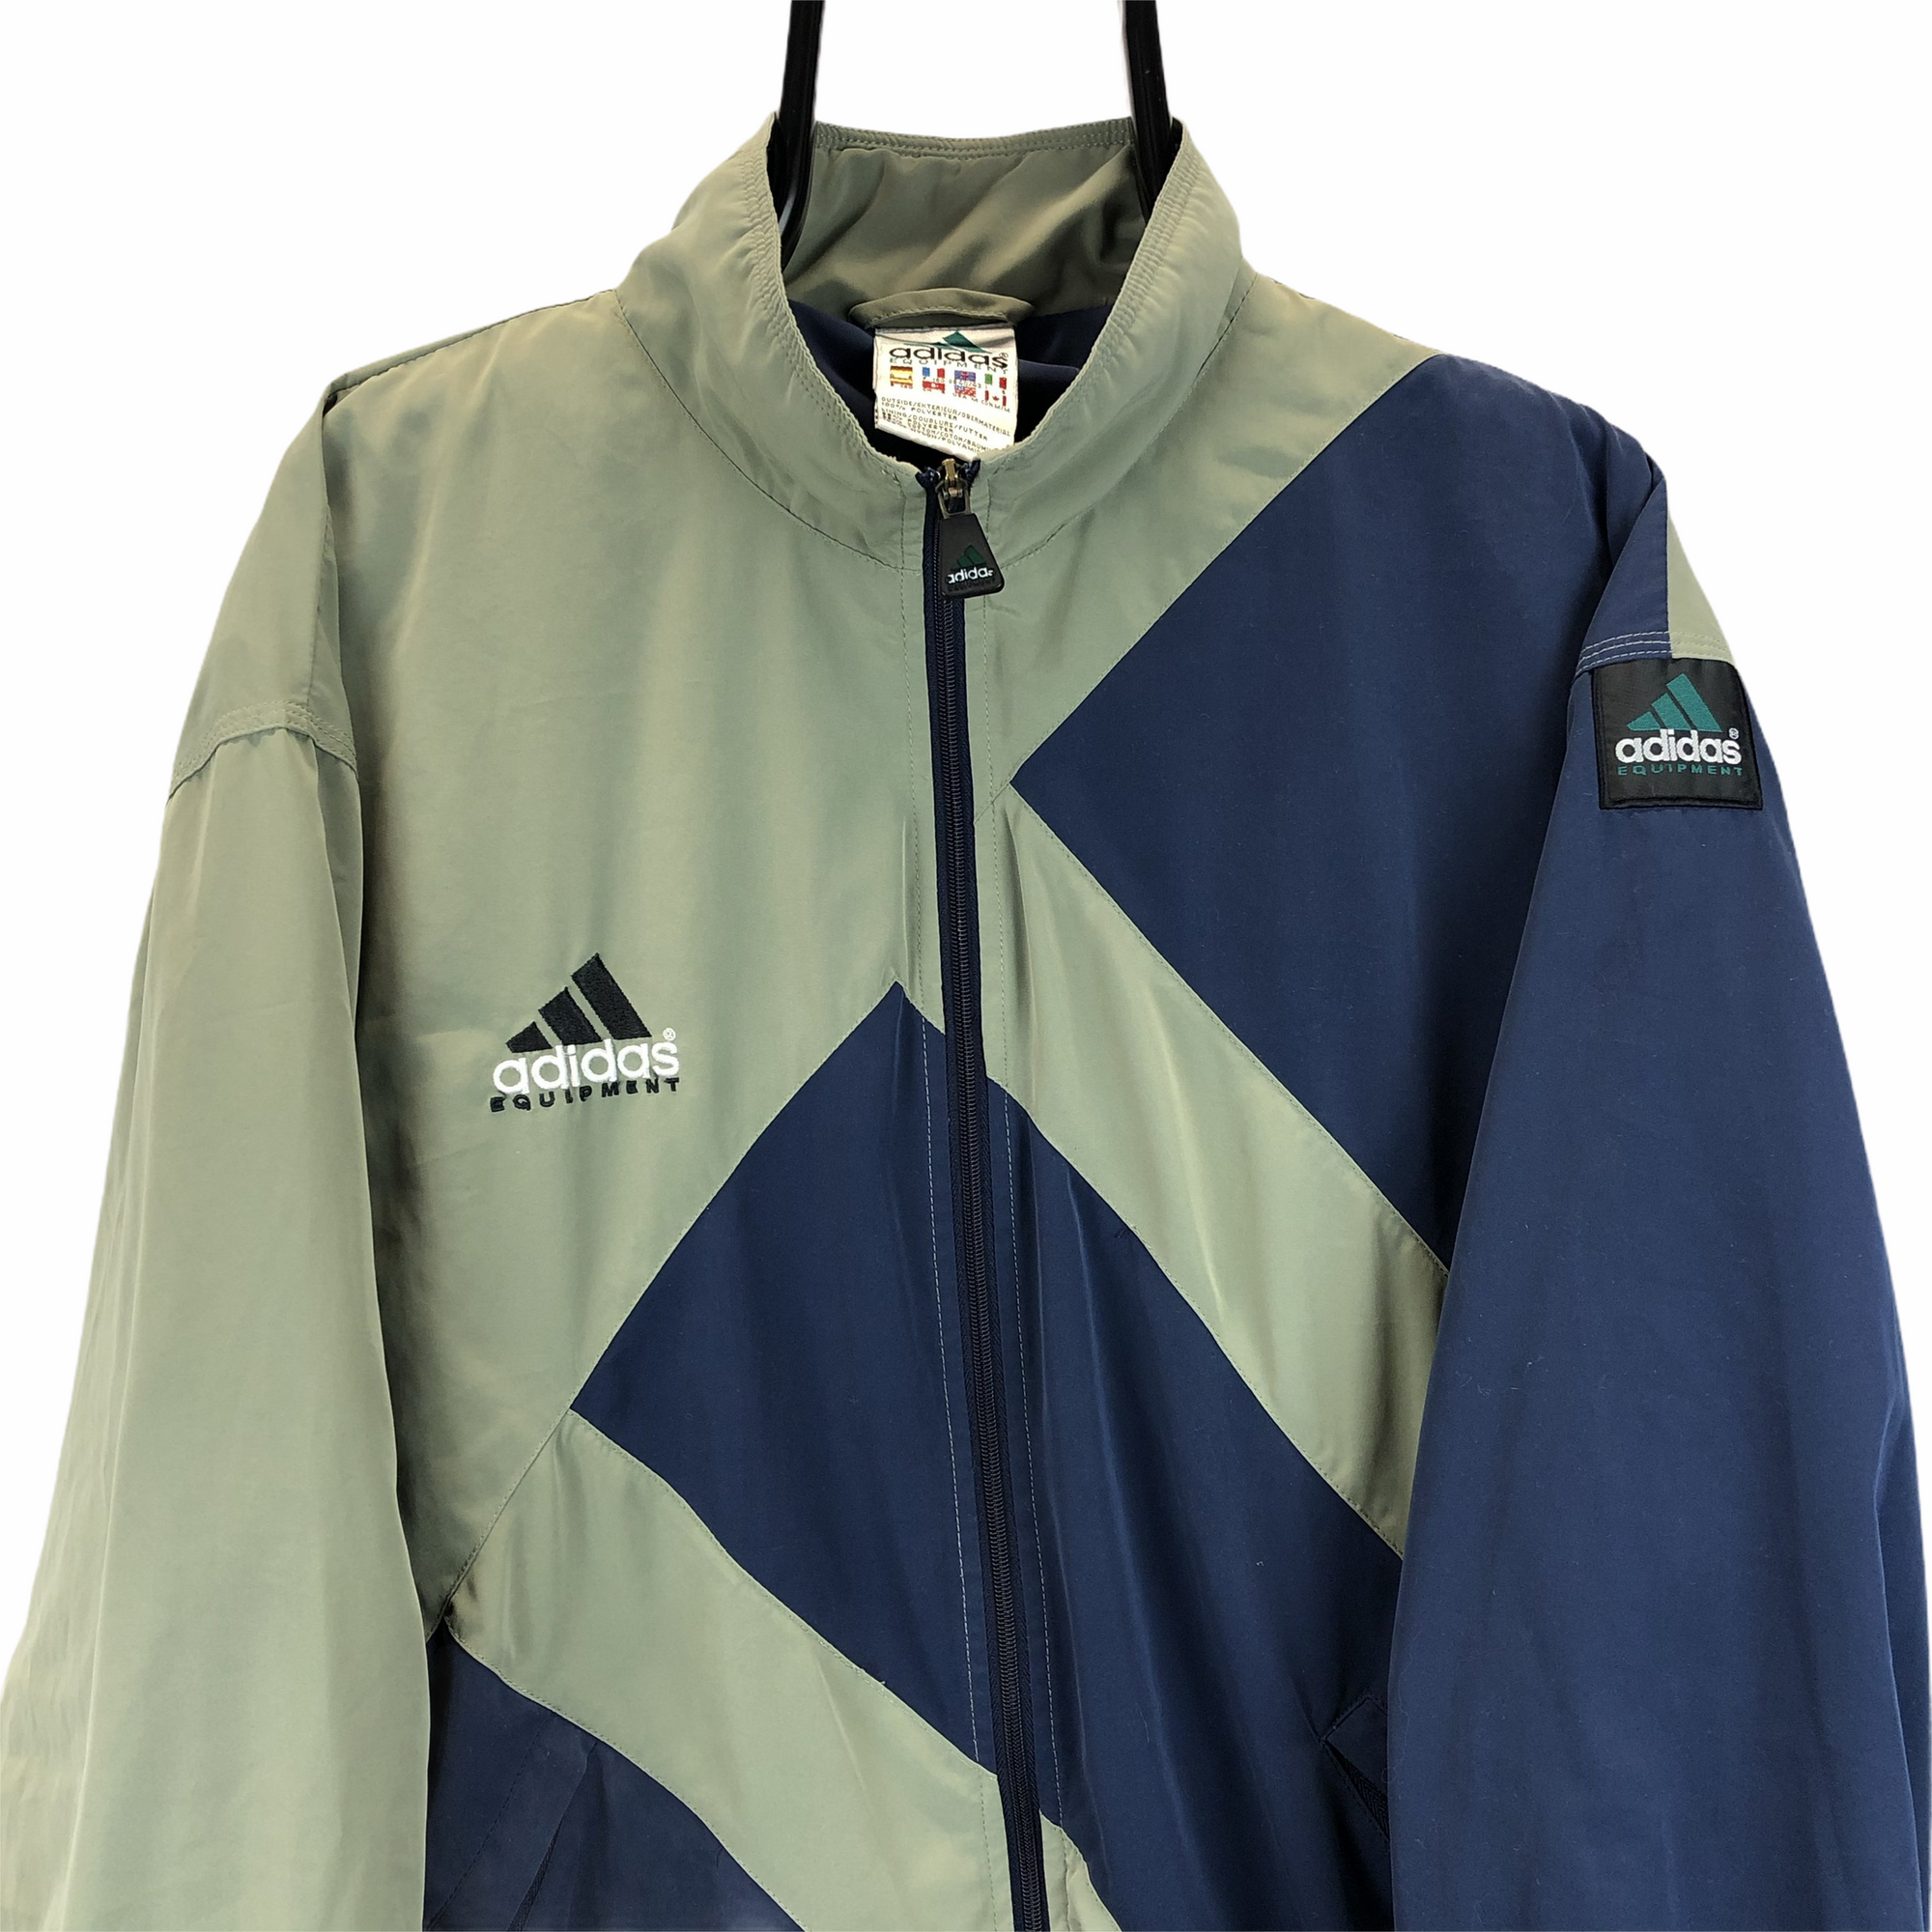 Vintage 90s Adidas Equipment Track Jacket in Khaki & Navy - Men’s Large/Women’s XL